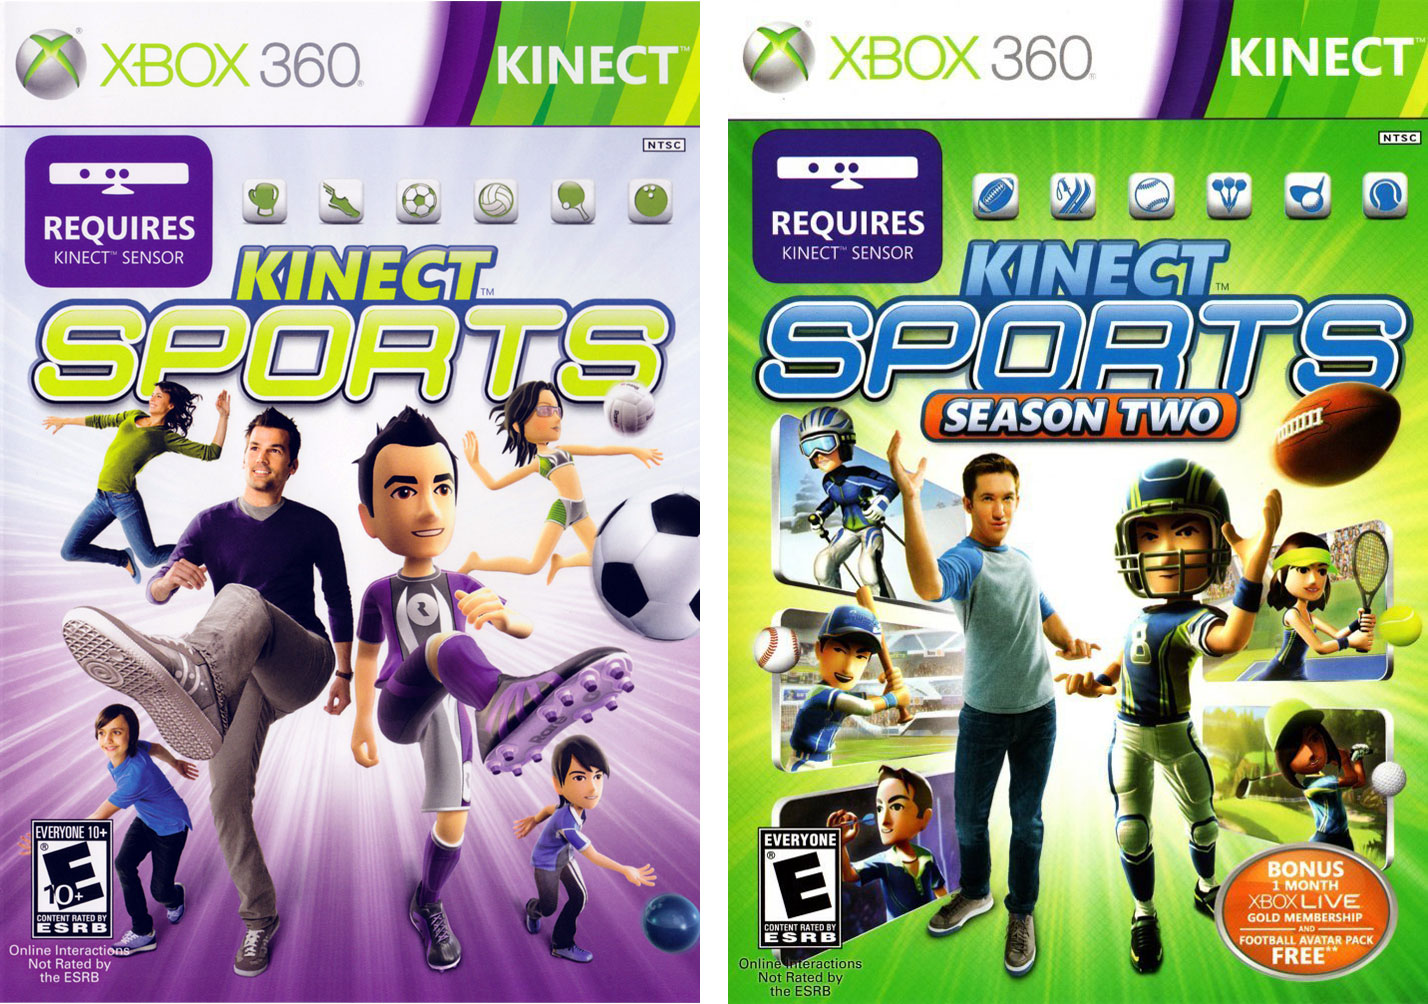 kinect sports season 1